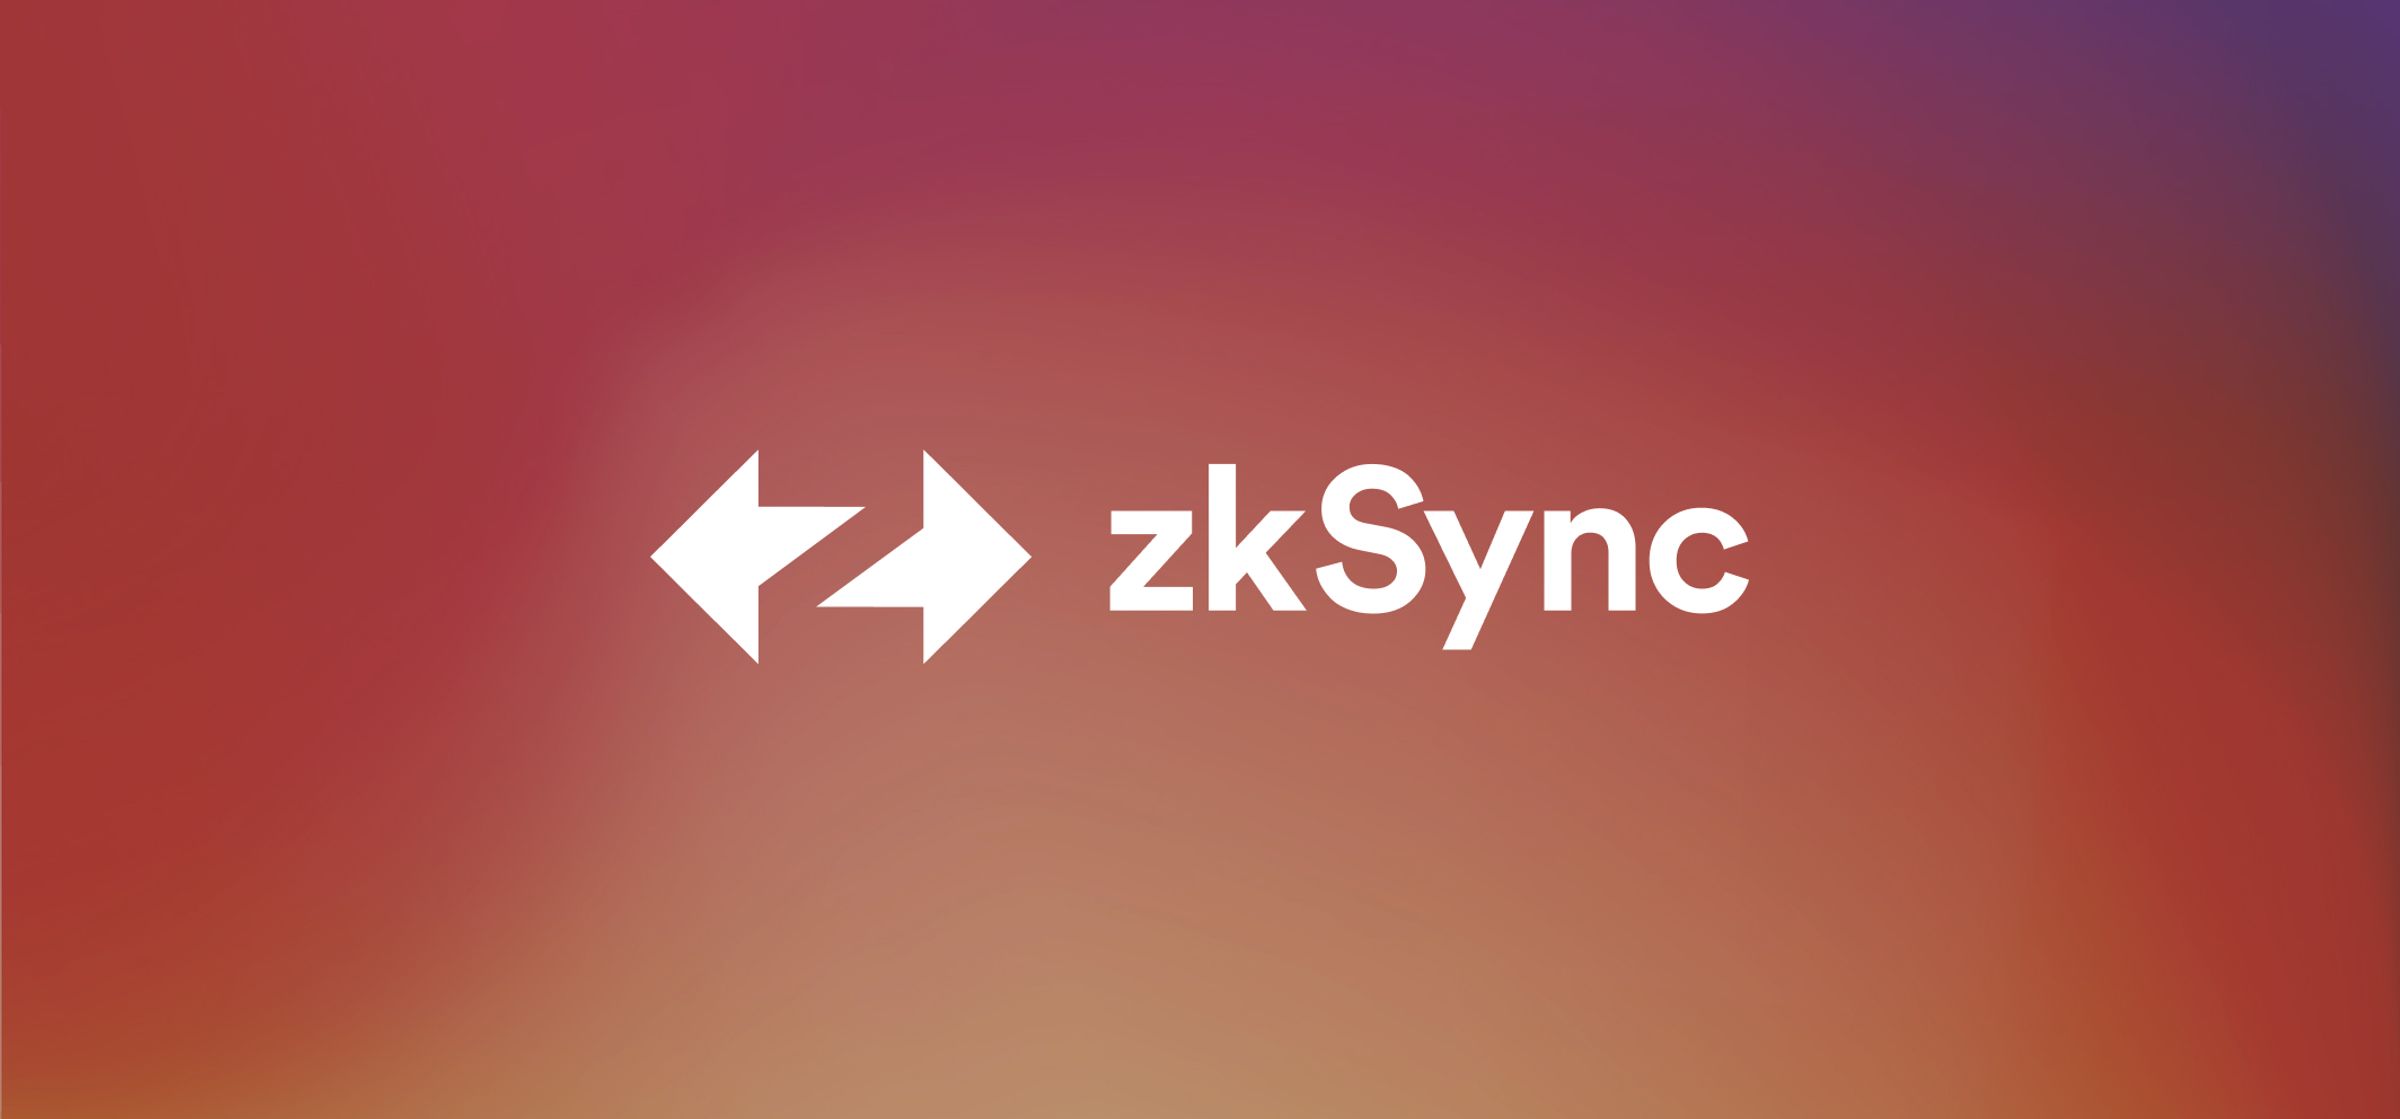 The fundamentals of zkSync